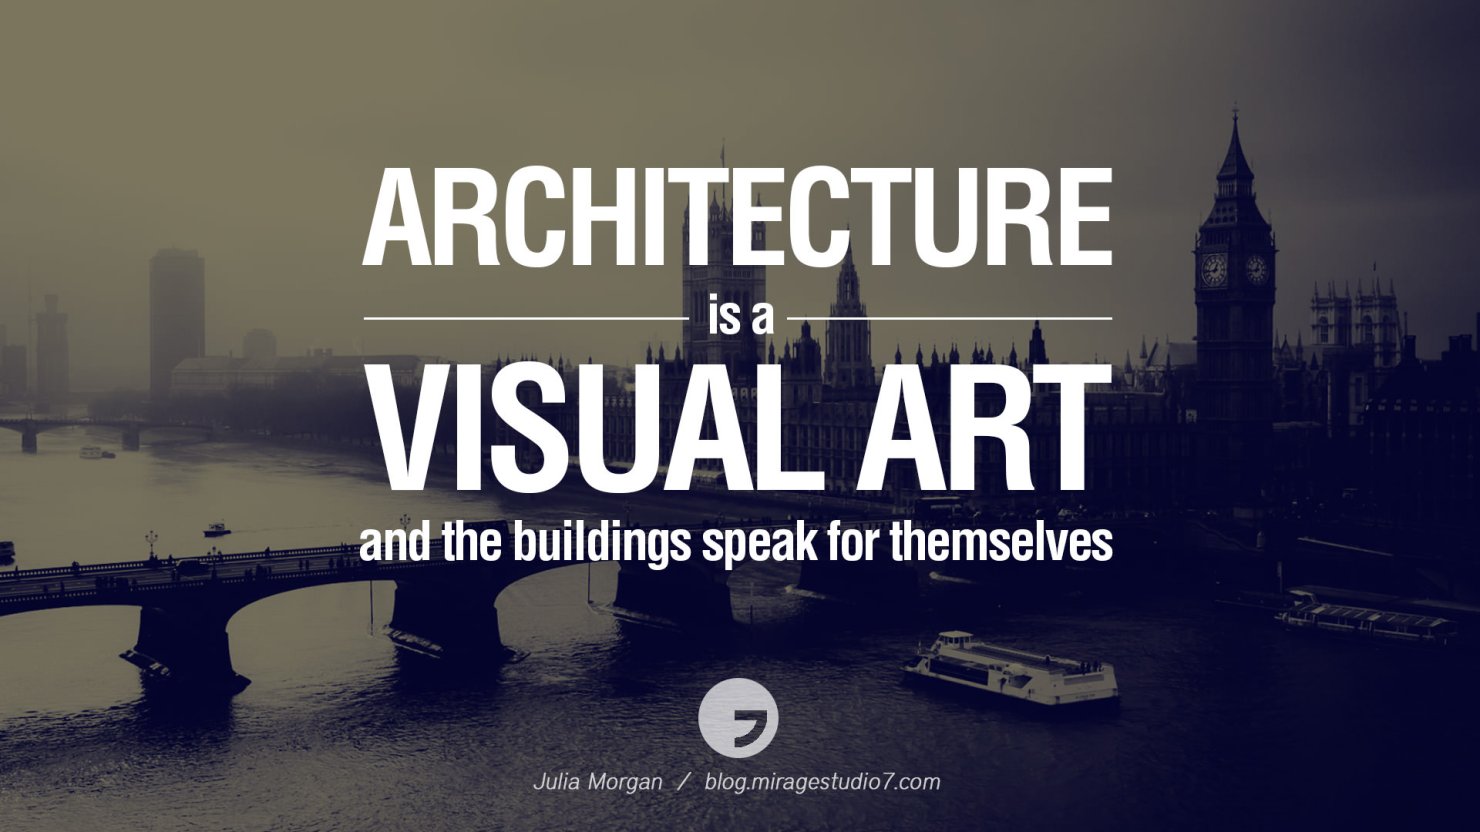 Architectural Design – "You dream,we design and build."